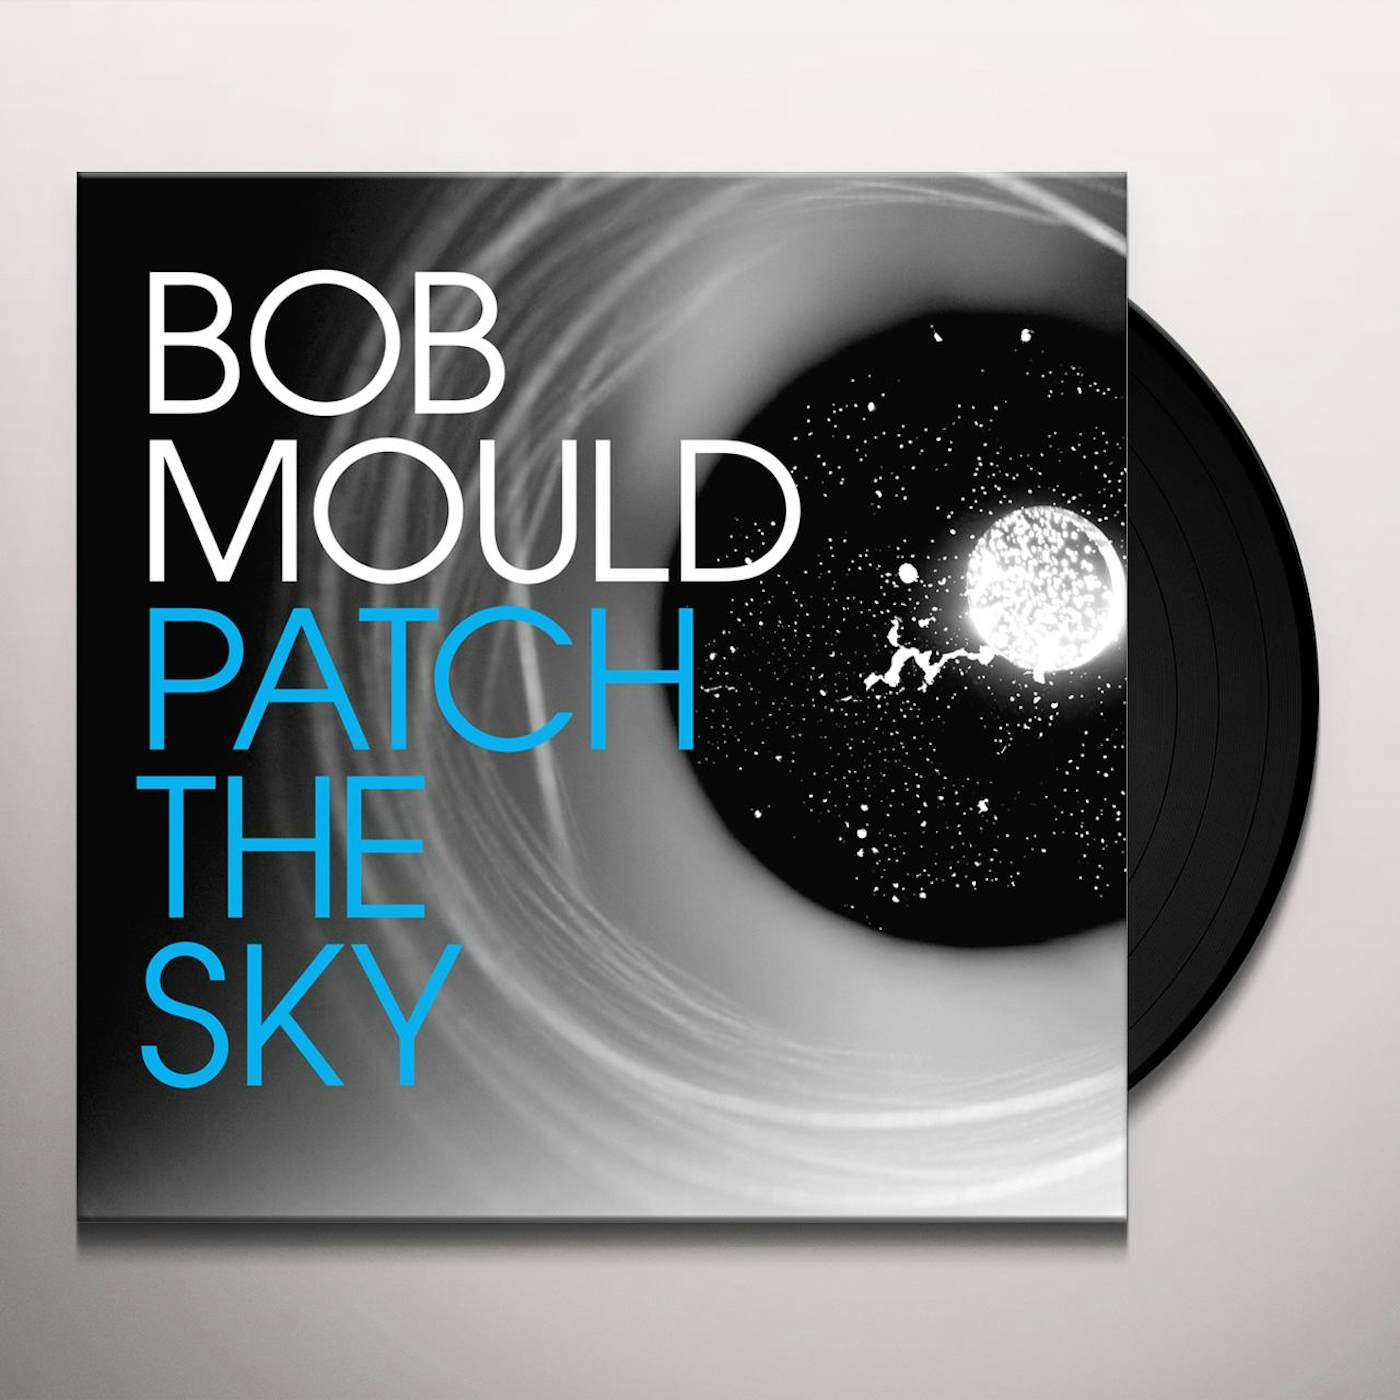 Bob Mould Patch The Sky Vinyl Record